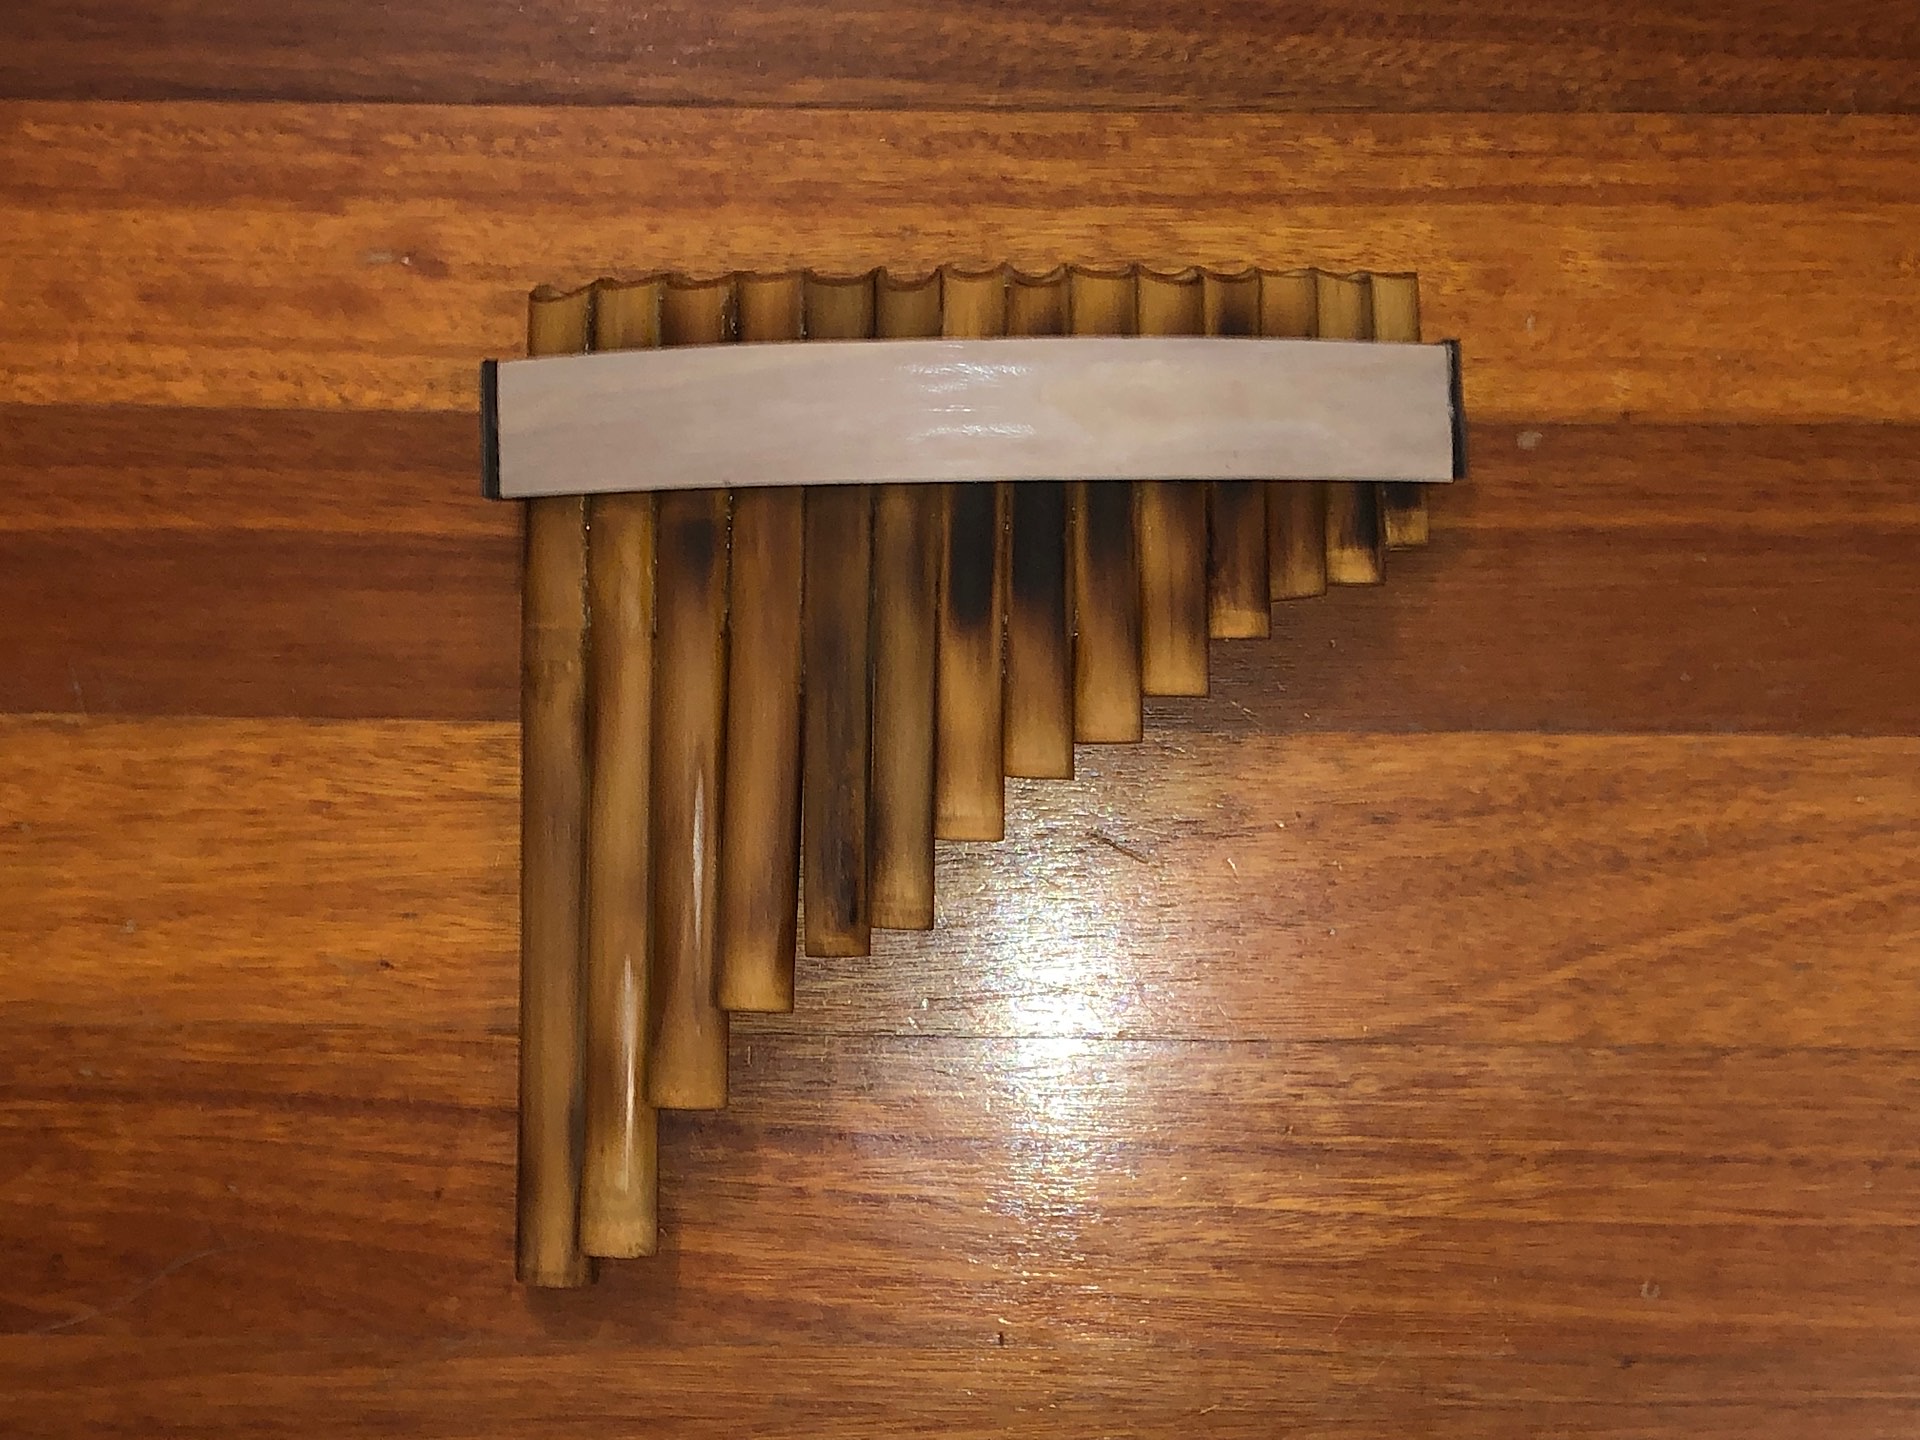 Bamboo pan flute prototype